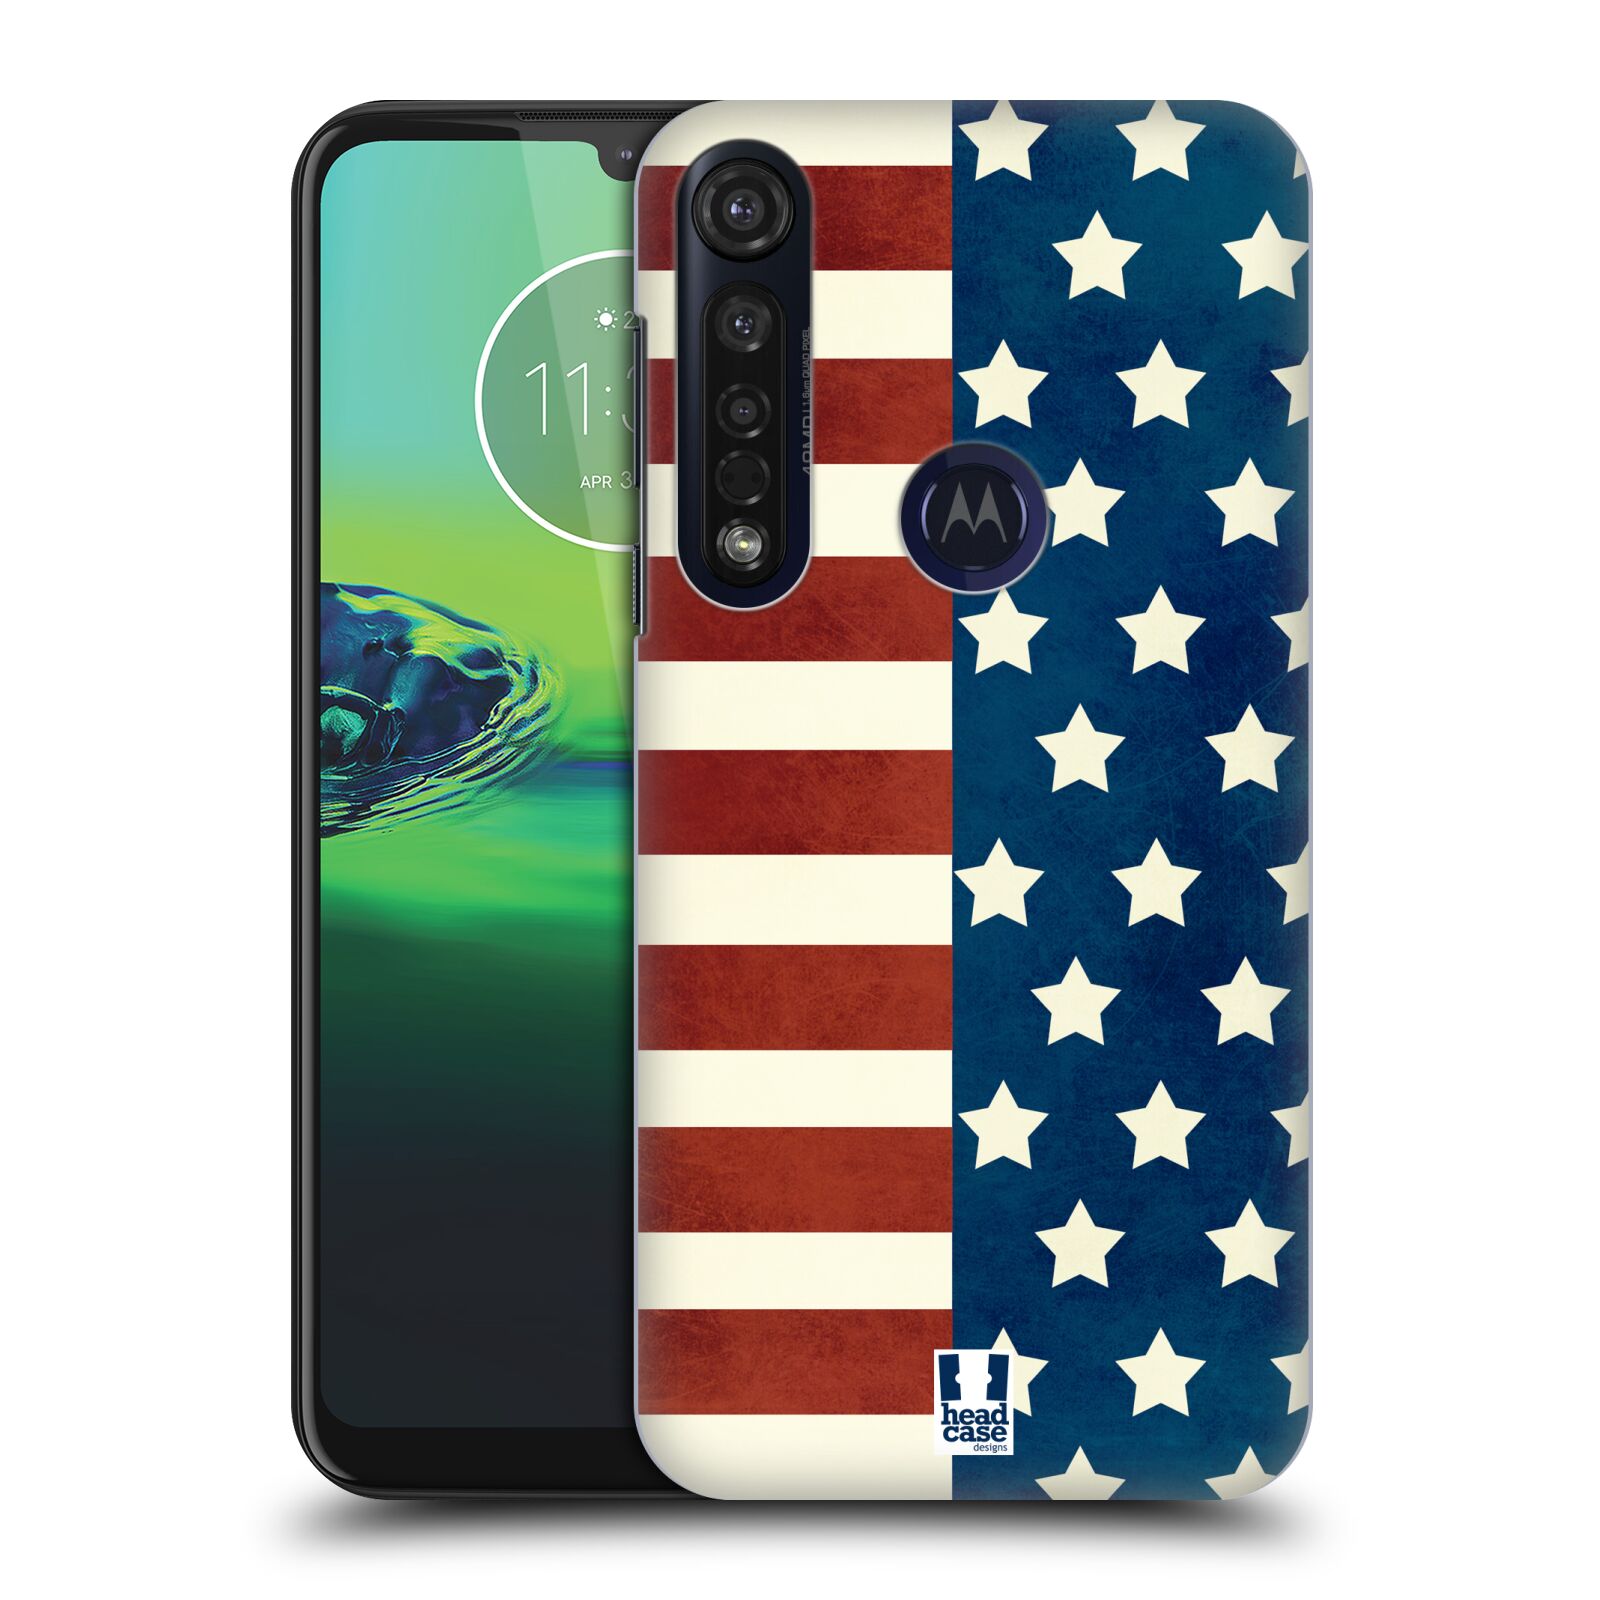 Pouzdro na mobil Motorola Moto G8 PLUS - HEAD CASE - vzor USA VLAJKA HVĚZDY A PRUHY